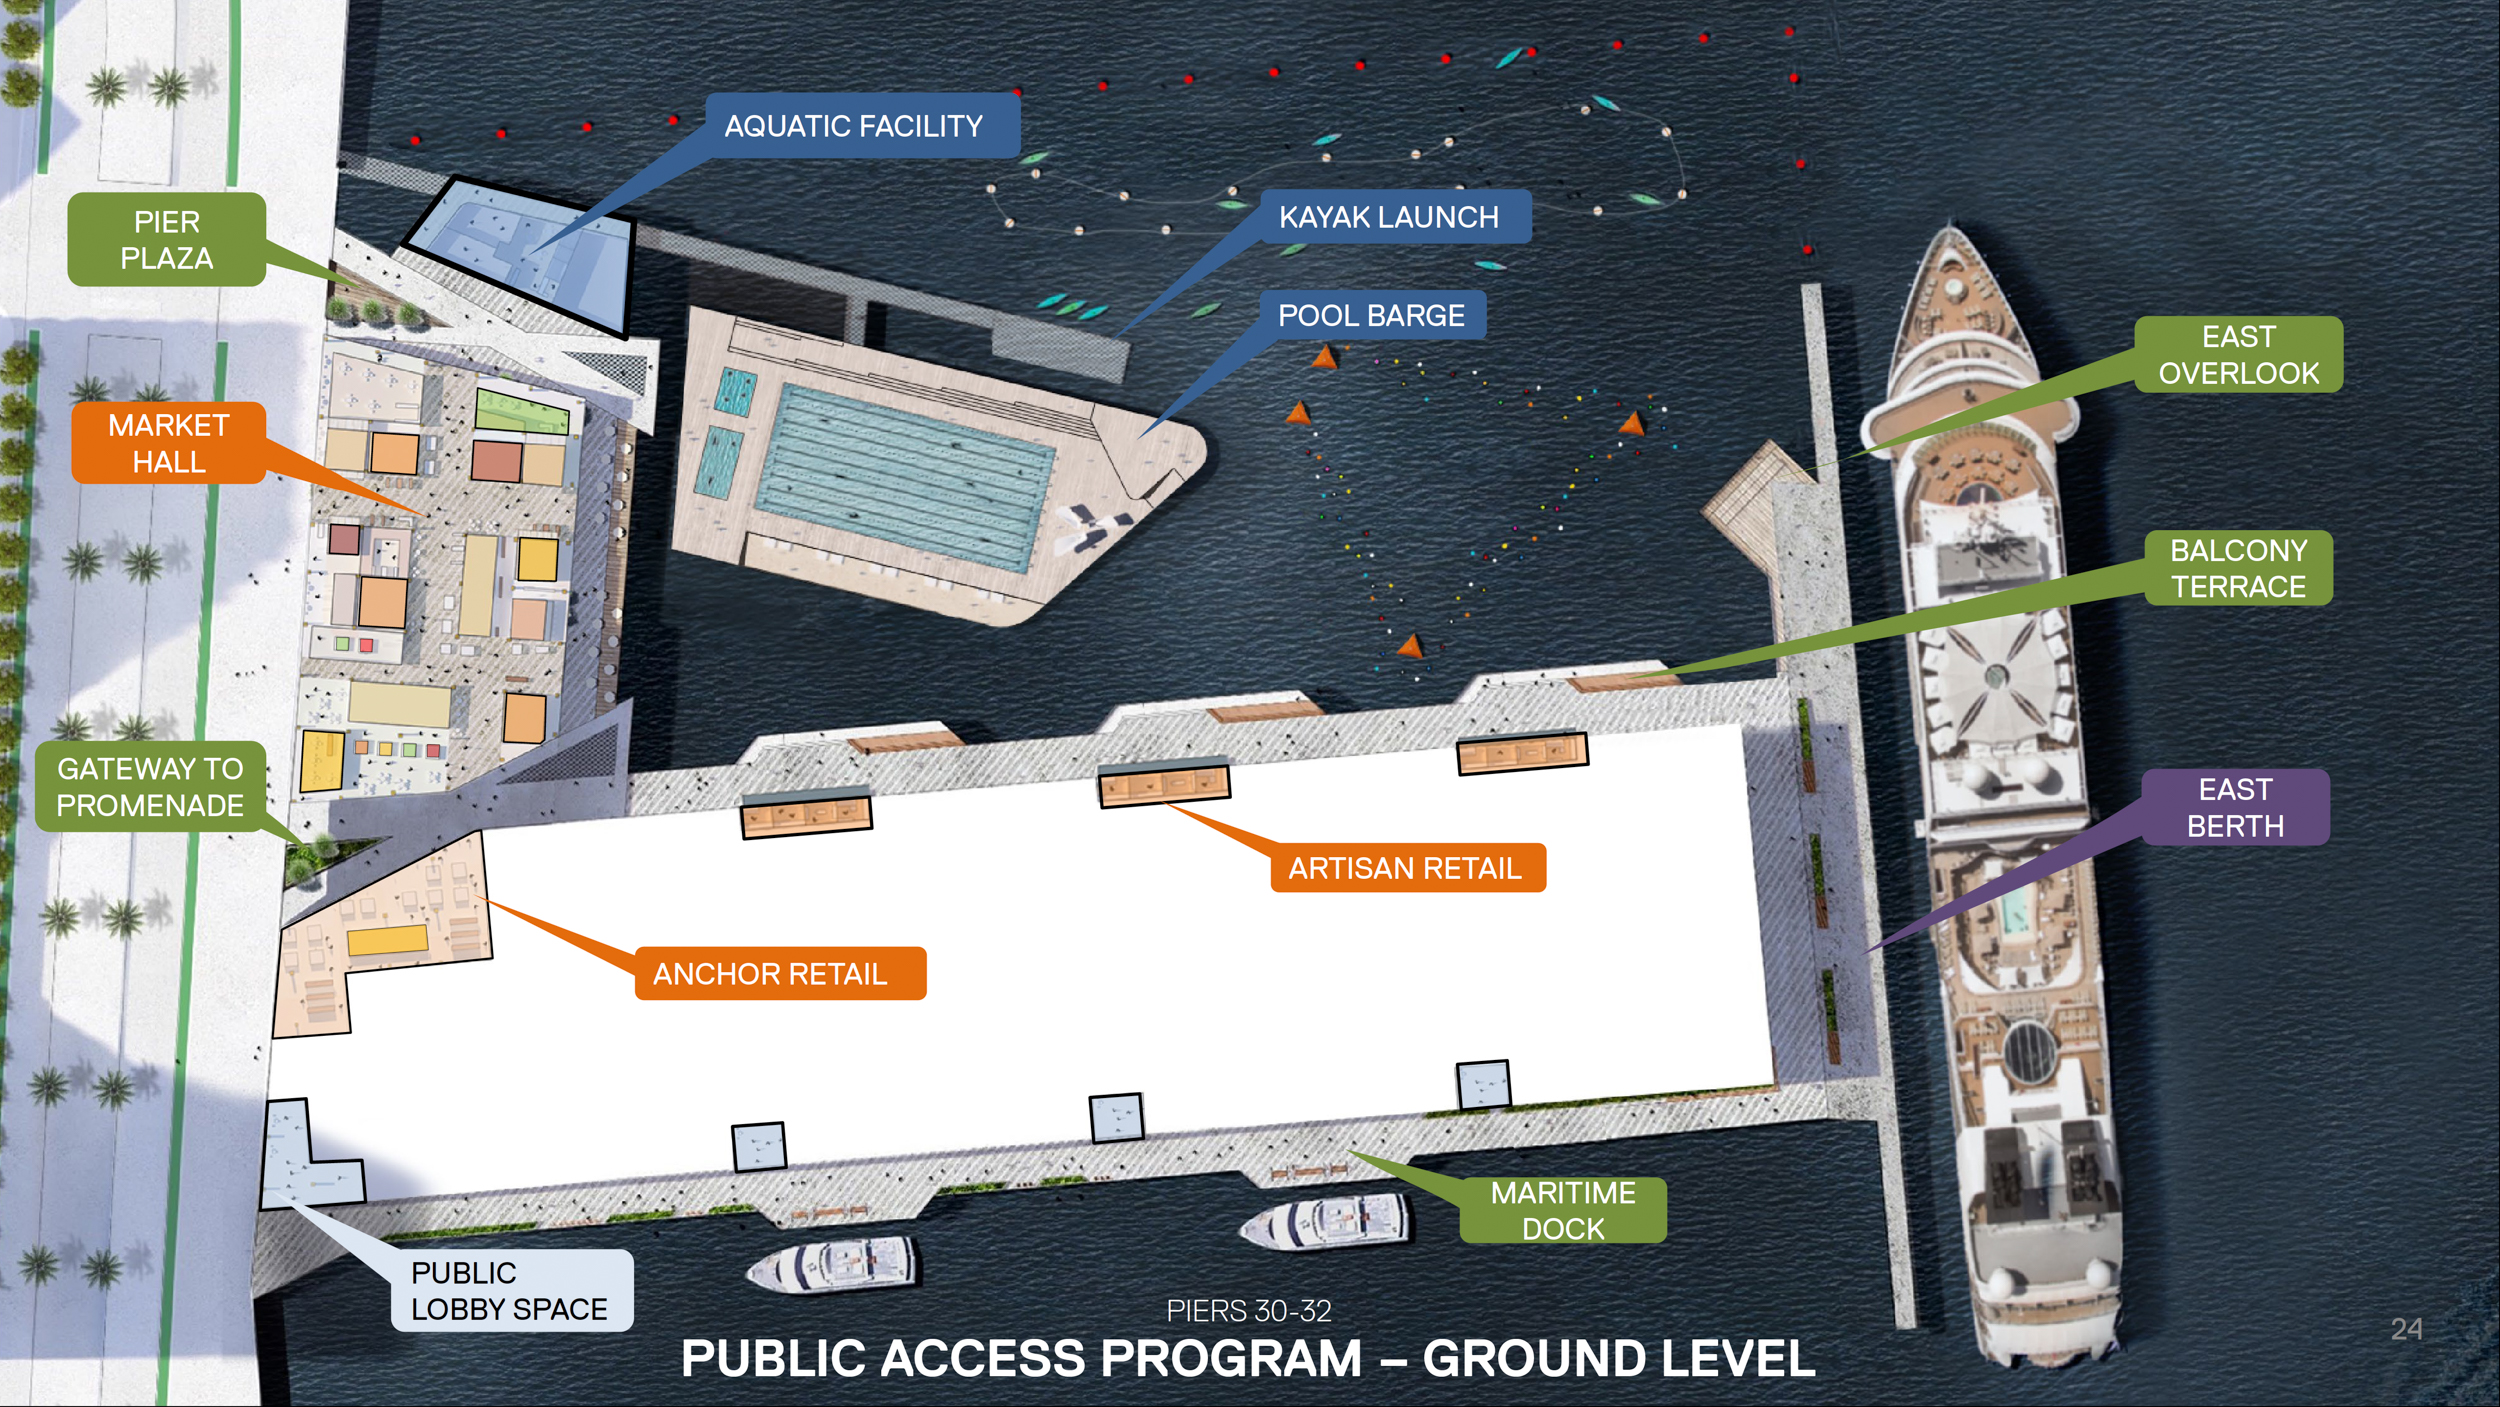 Piers 30-32 ground level site map, illustration via project presentation